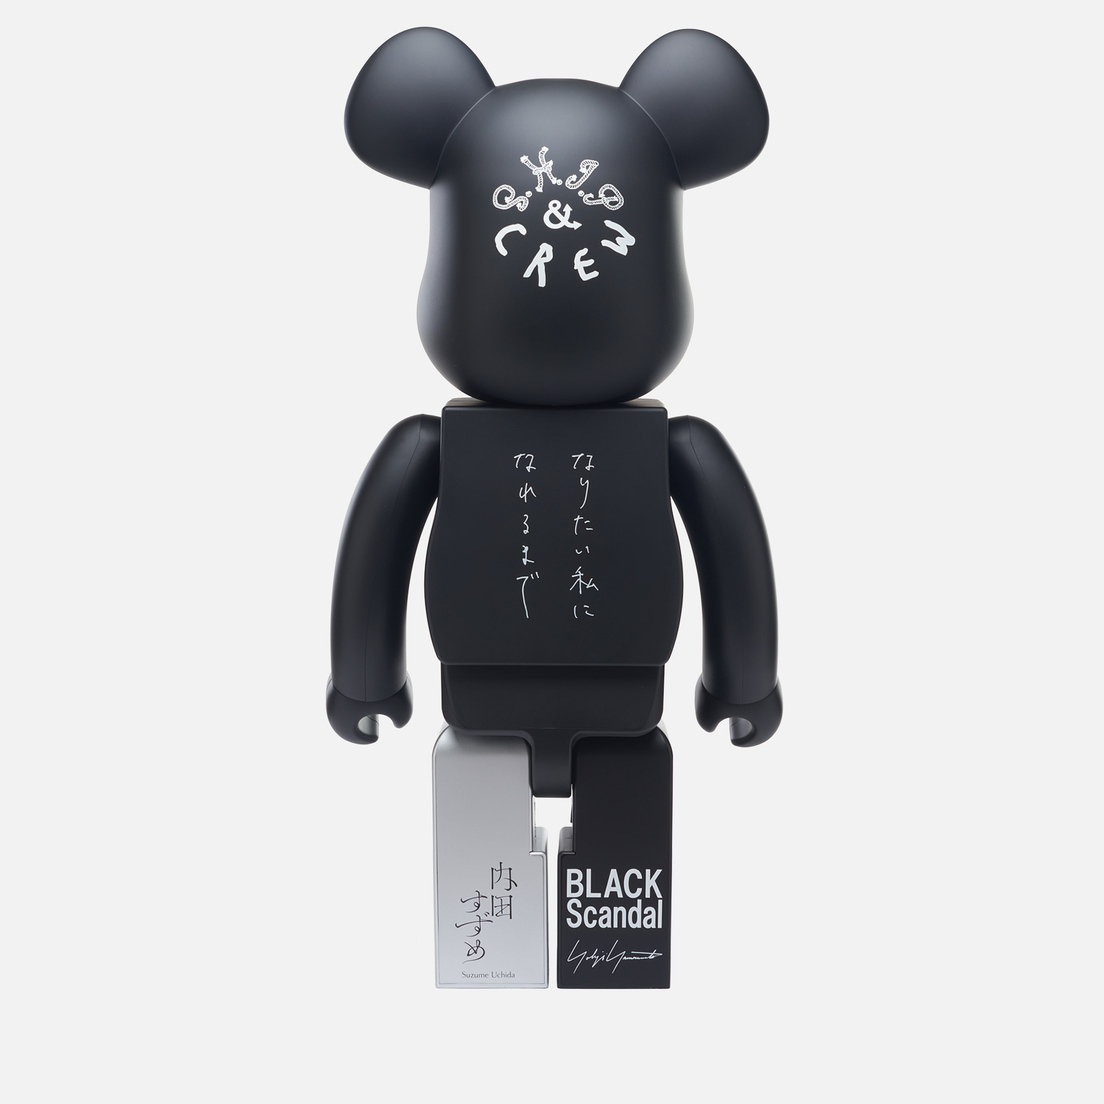 Medicom Toy Игрушка Black Scandal Yohji Yamamoto x Suzume Uchida x S.H.I.P&crew Ideal Self 1000%